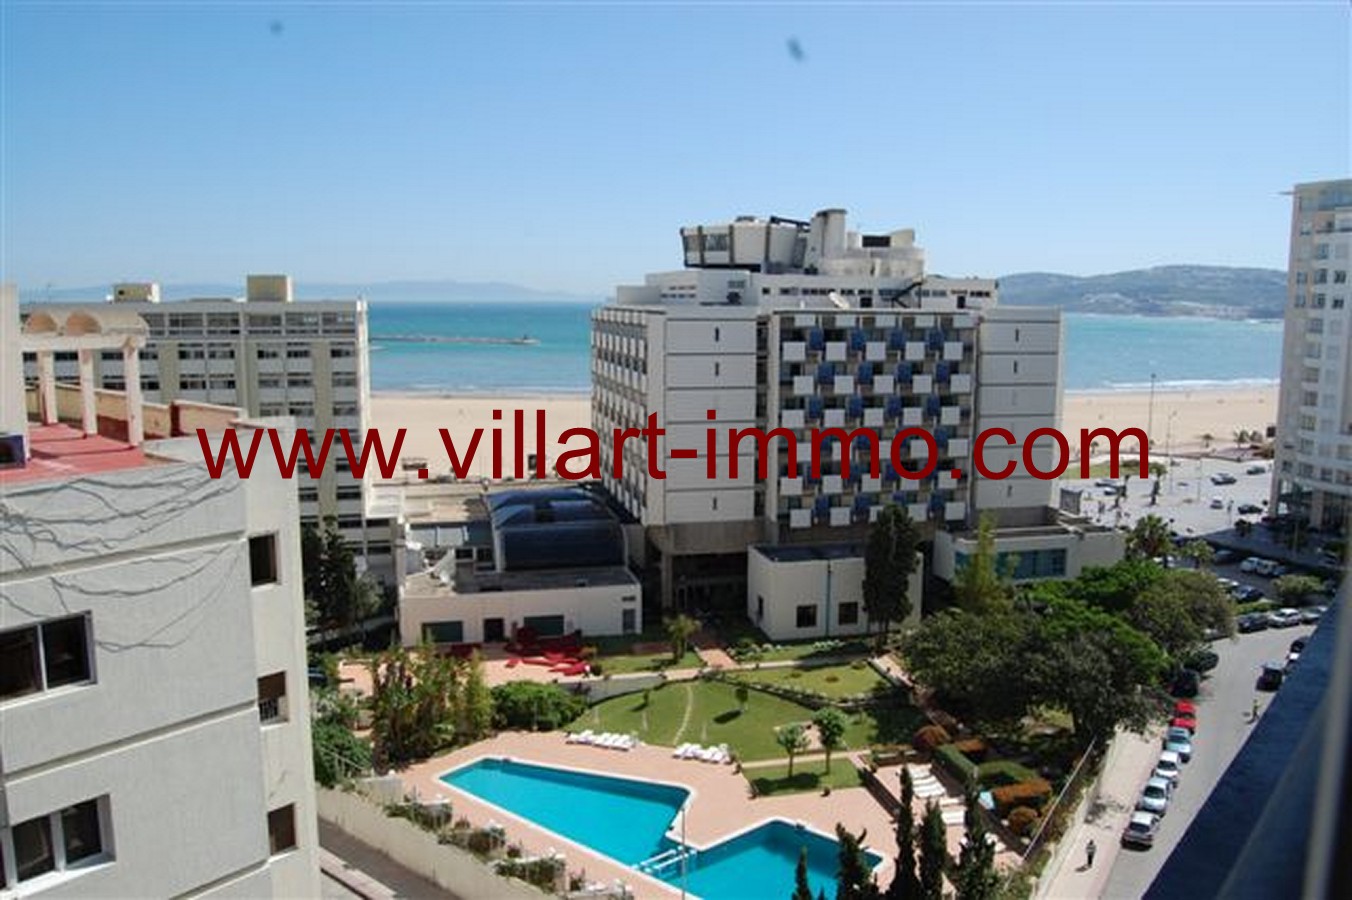 1- Vente -Appartement-Tanger-Maroc–Anejma-Vue-VA26-Villartimmo